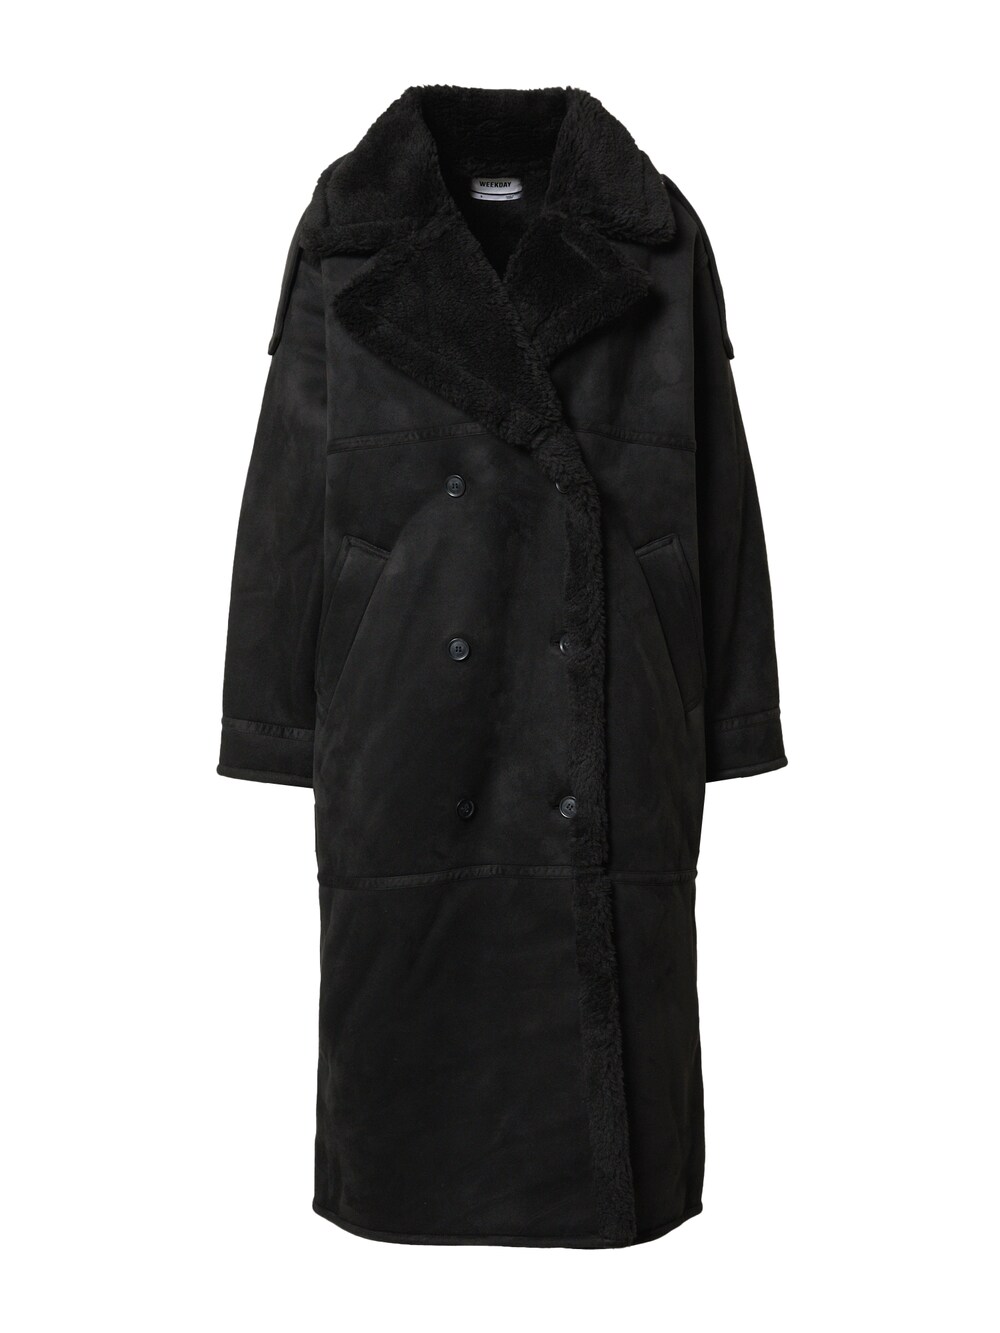 Межсезонное пальто WEEKDAY, черный межсезонное пальто weekday черный